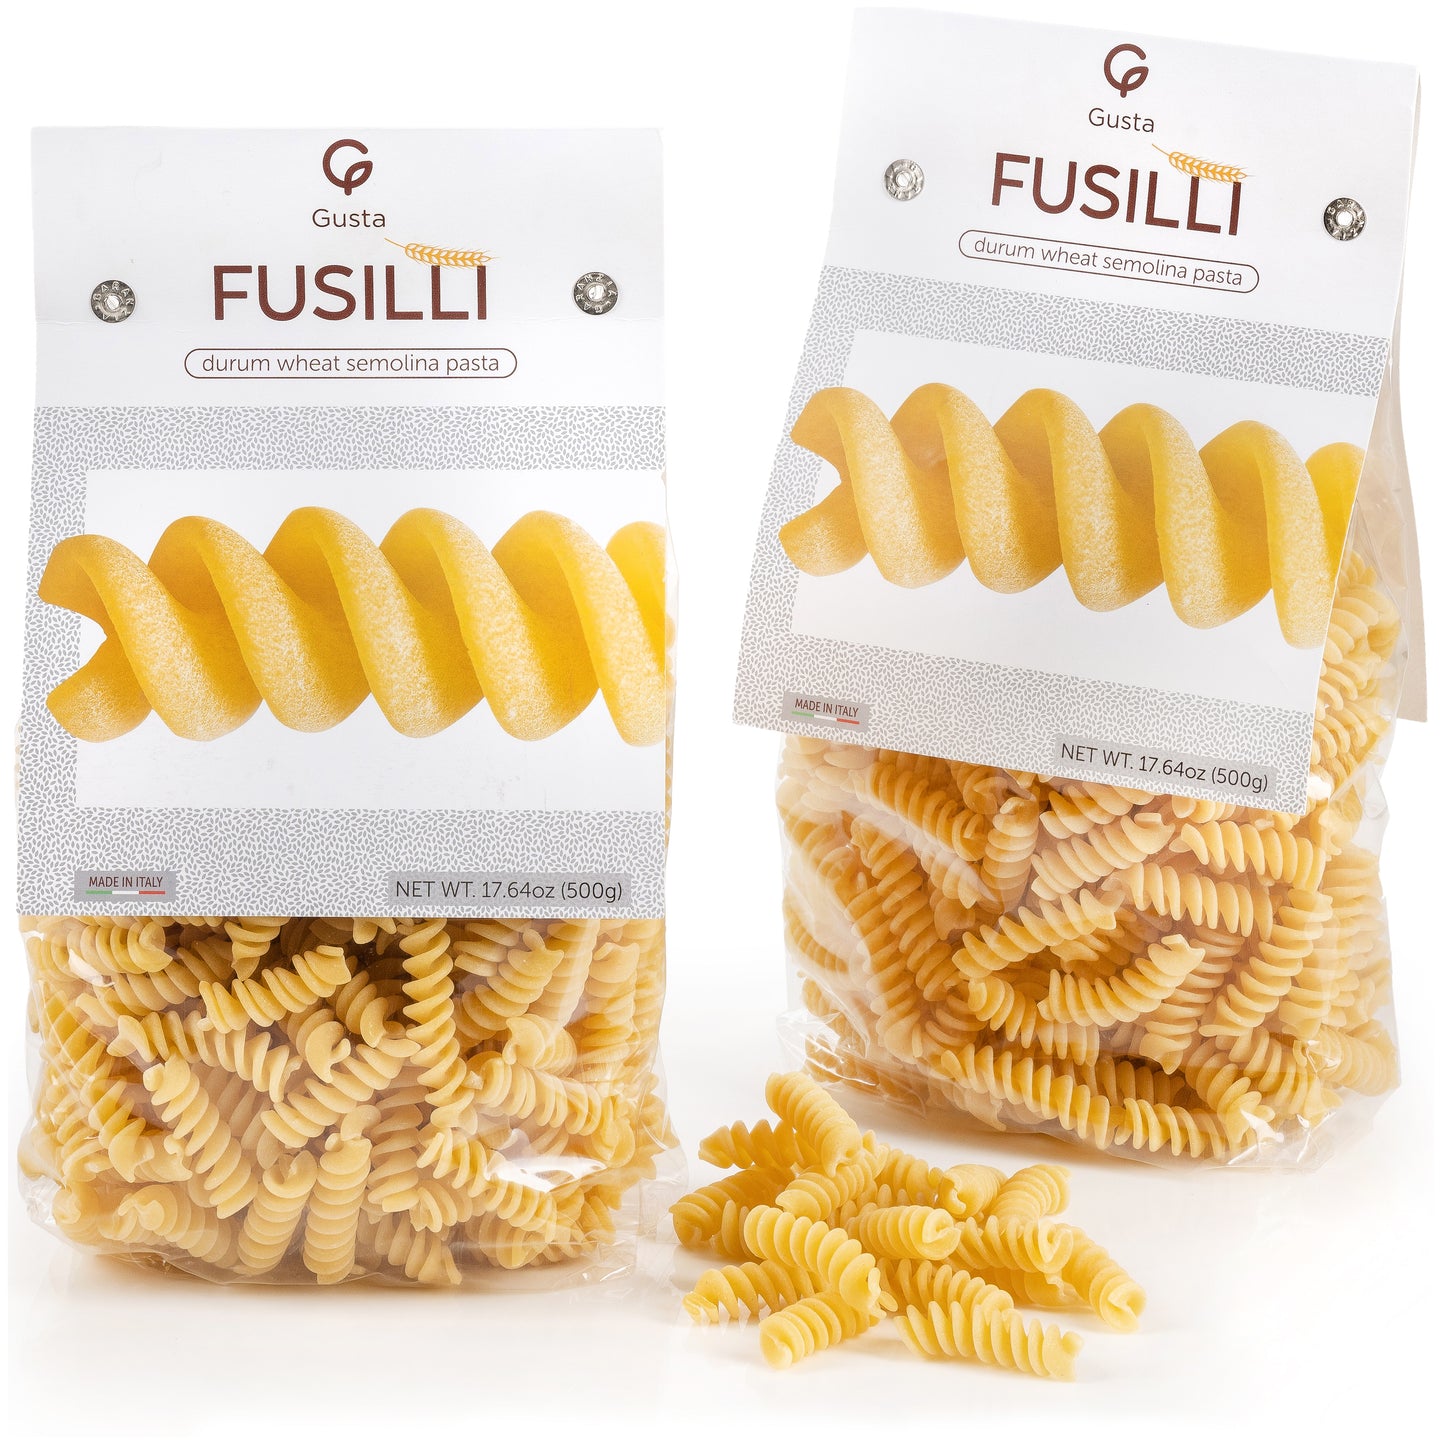 Gusta Fusilli Pasta - USDA Organic - Non-GMO Durum Wheat Semolina